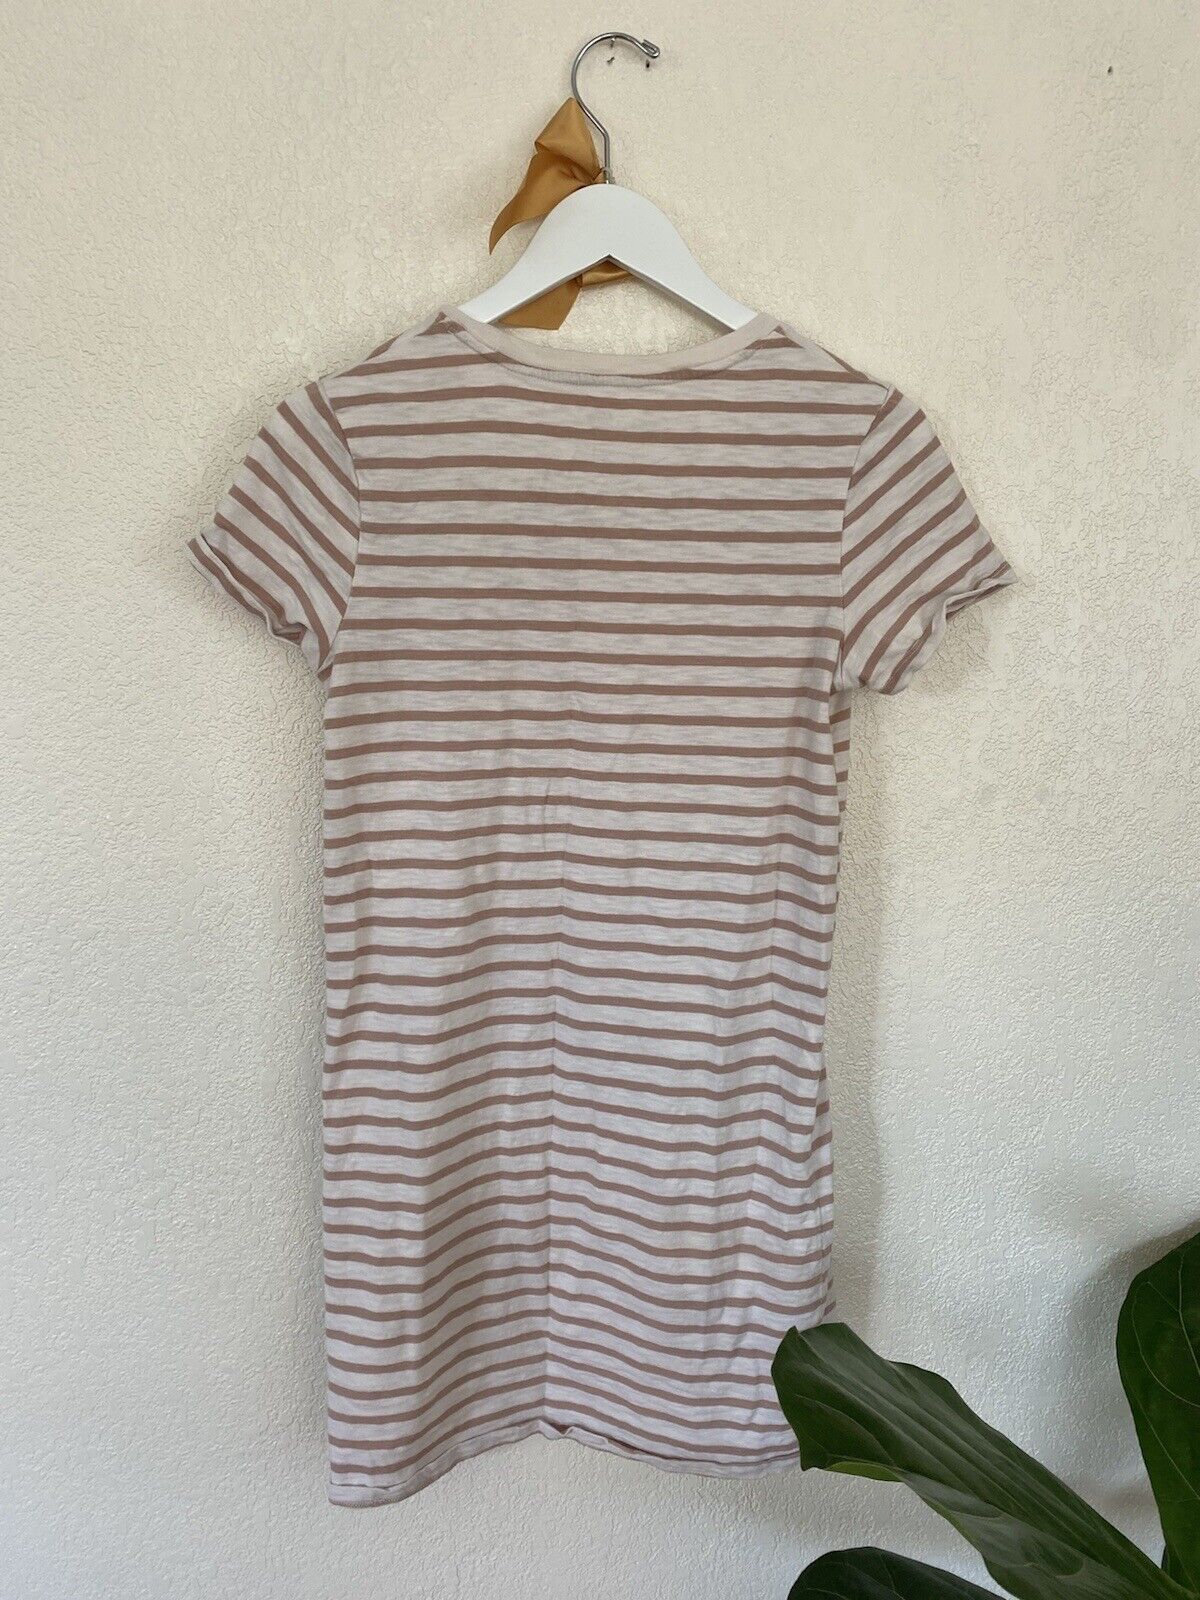 White and Tan Stripe Tshirt Dress - Universal Thread - Women's XS